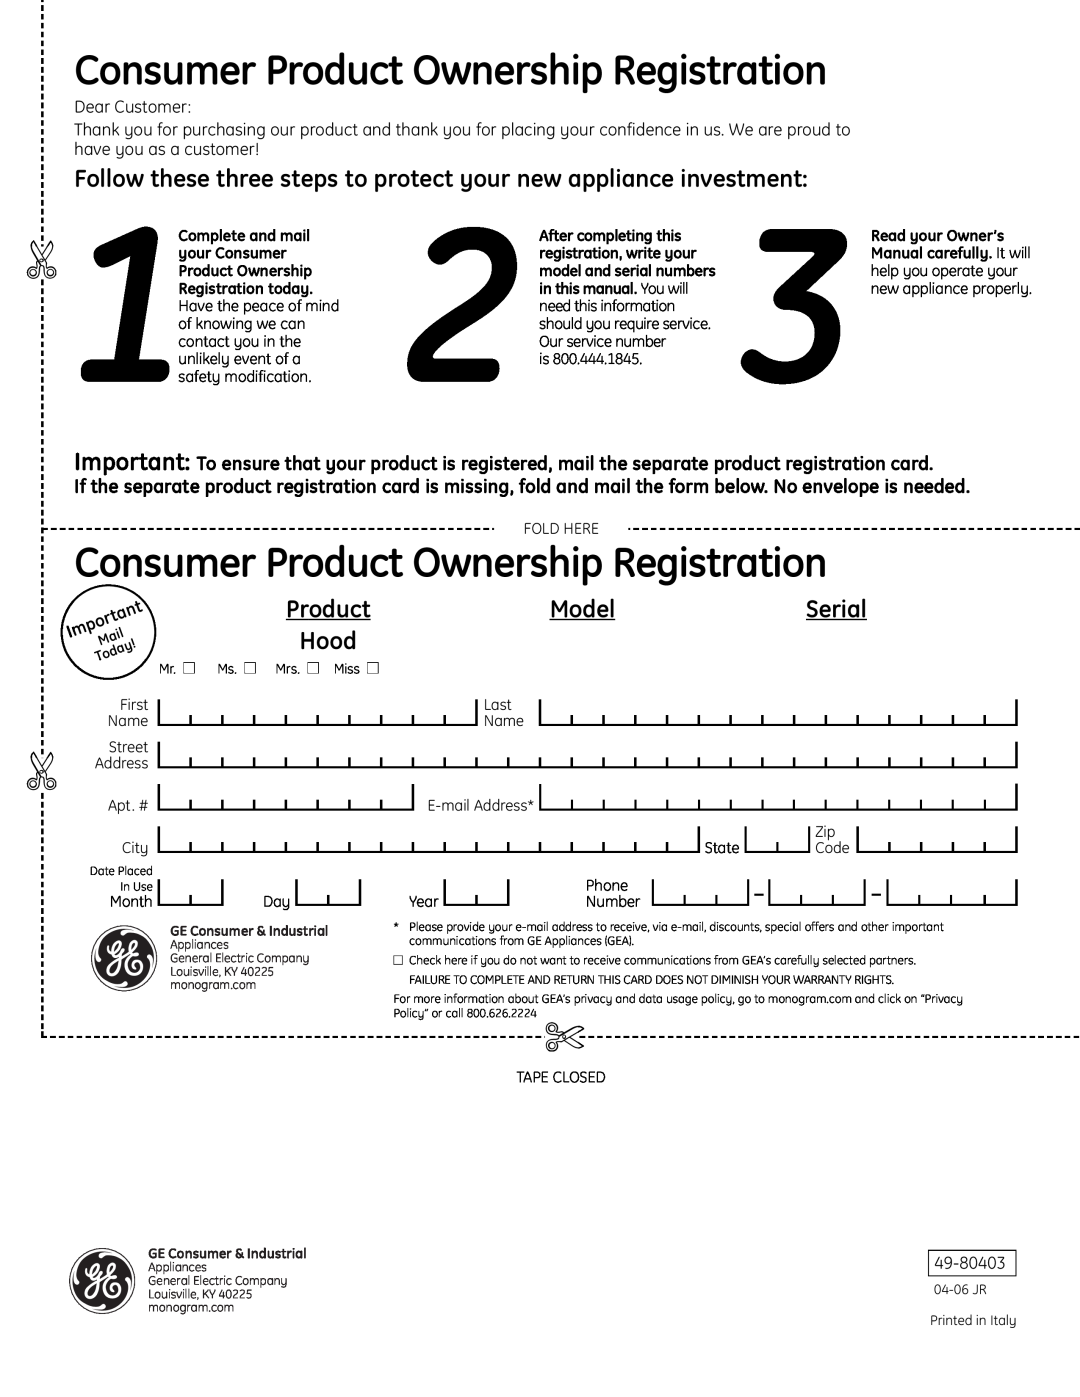 GE Monogram ZV900, ZV925 owner manual Consumer Product Ownership Registration, Serial, Model, Hood 